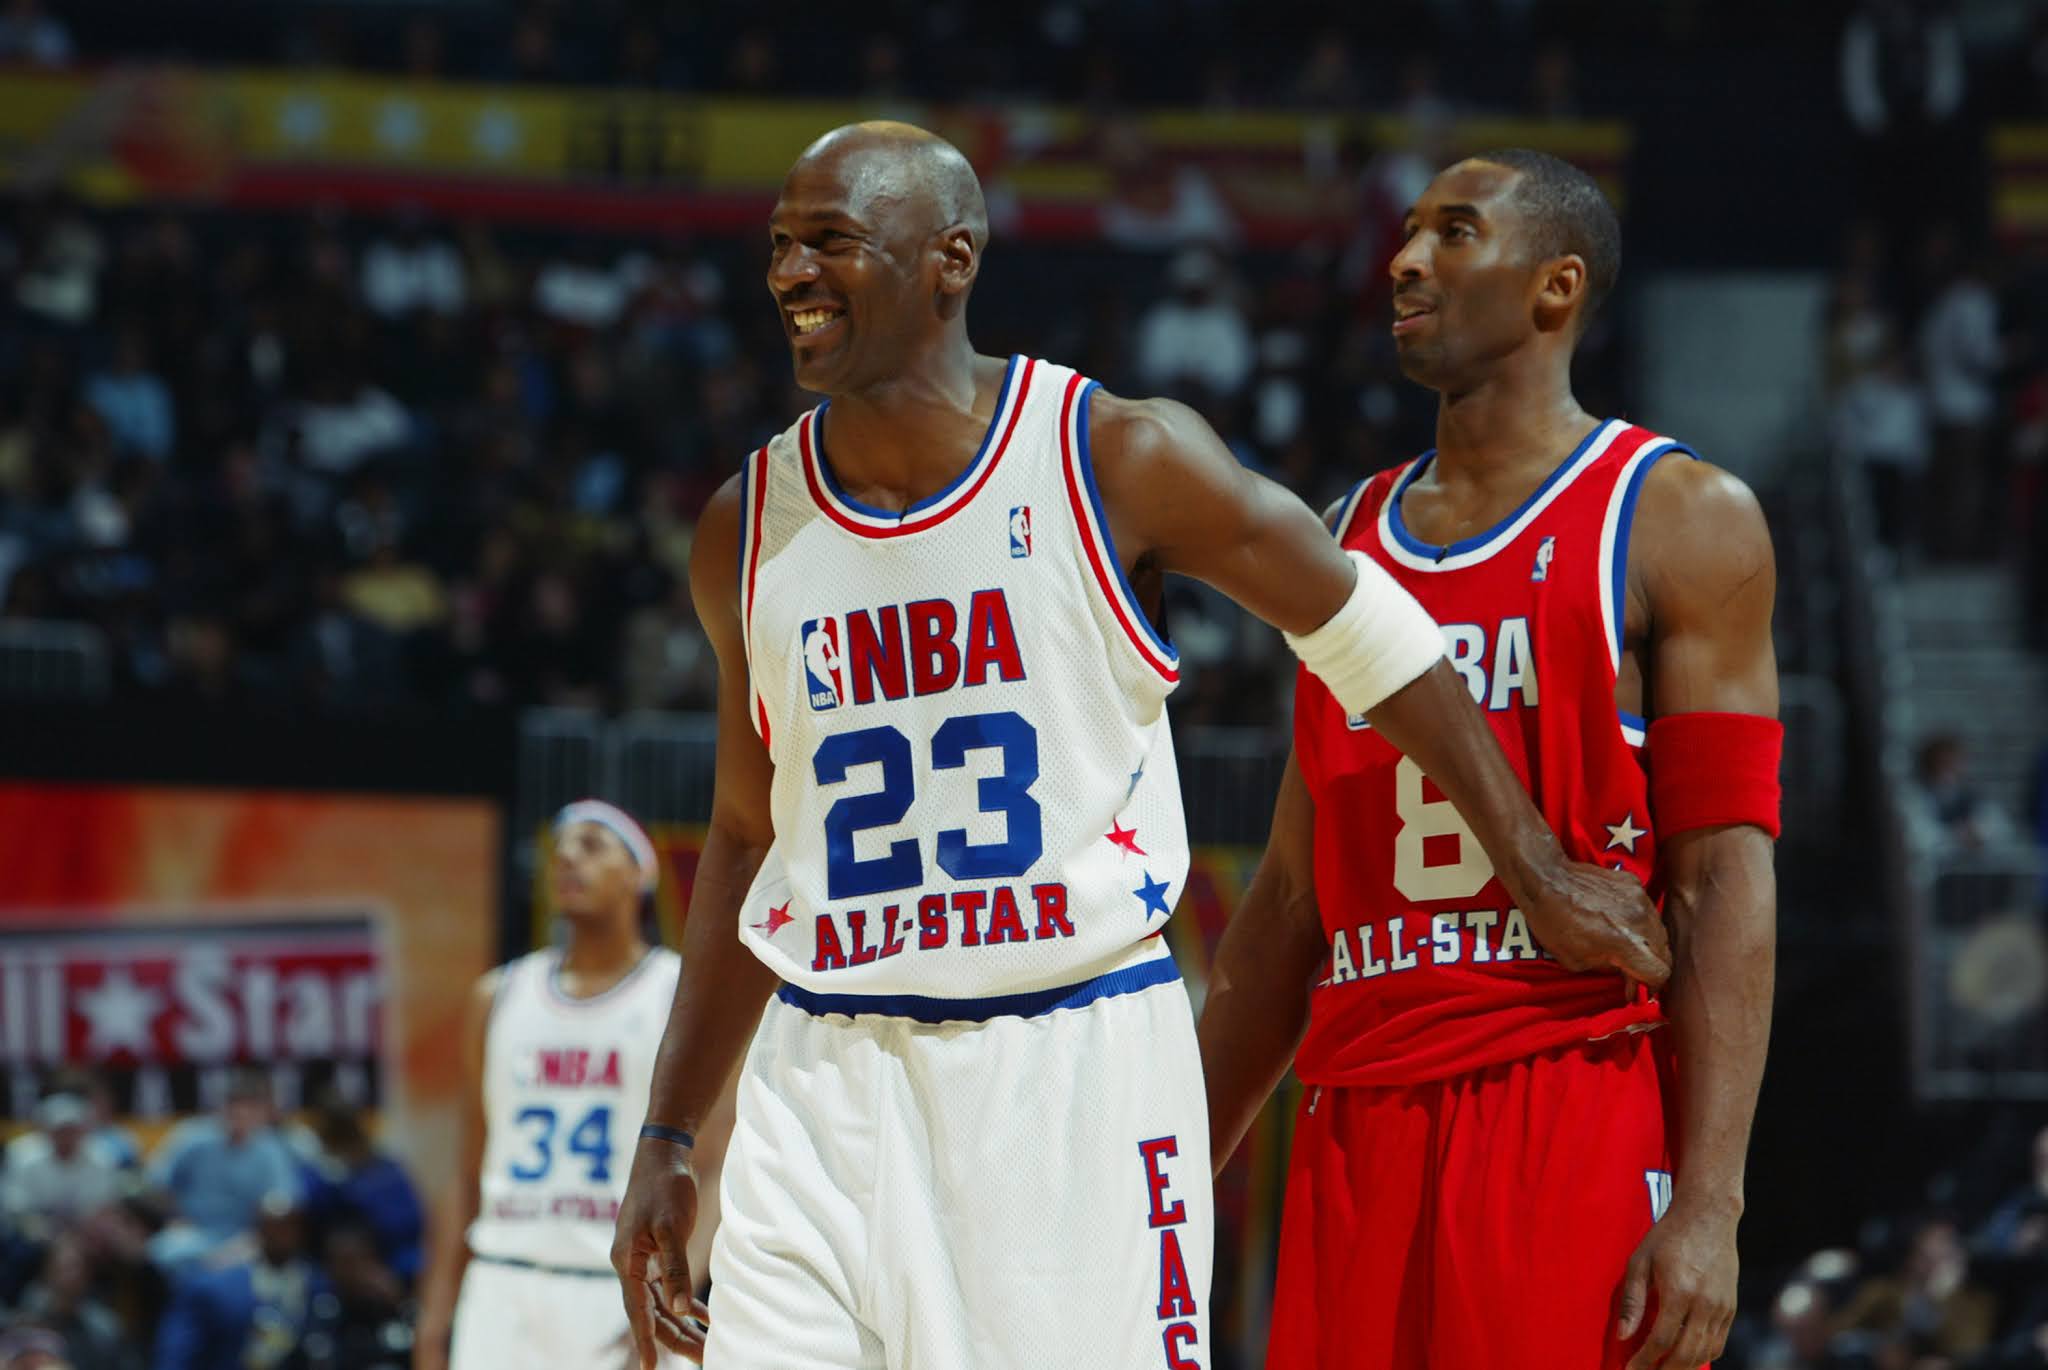 2003 NBA All-Star Game (2003)